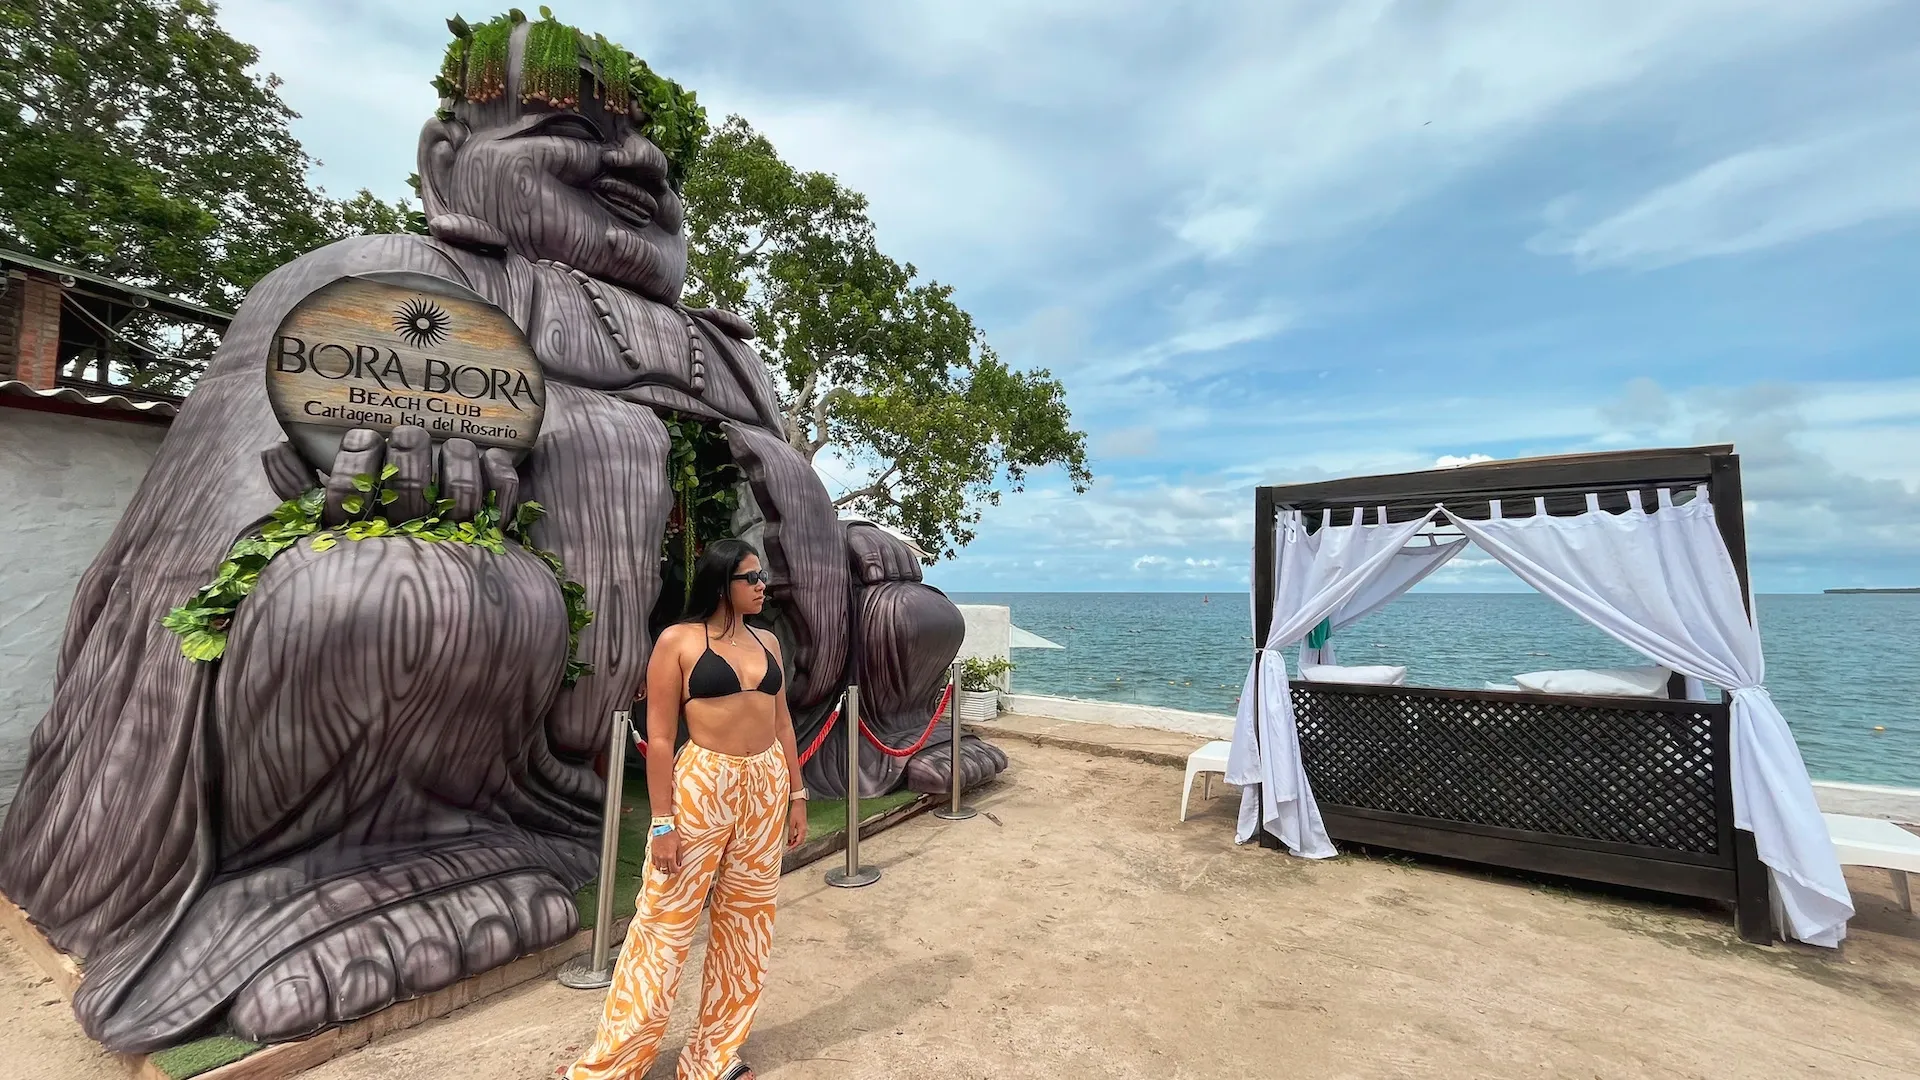 Bora Bora Beach Club Cartagena: What you need to know